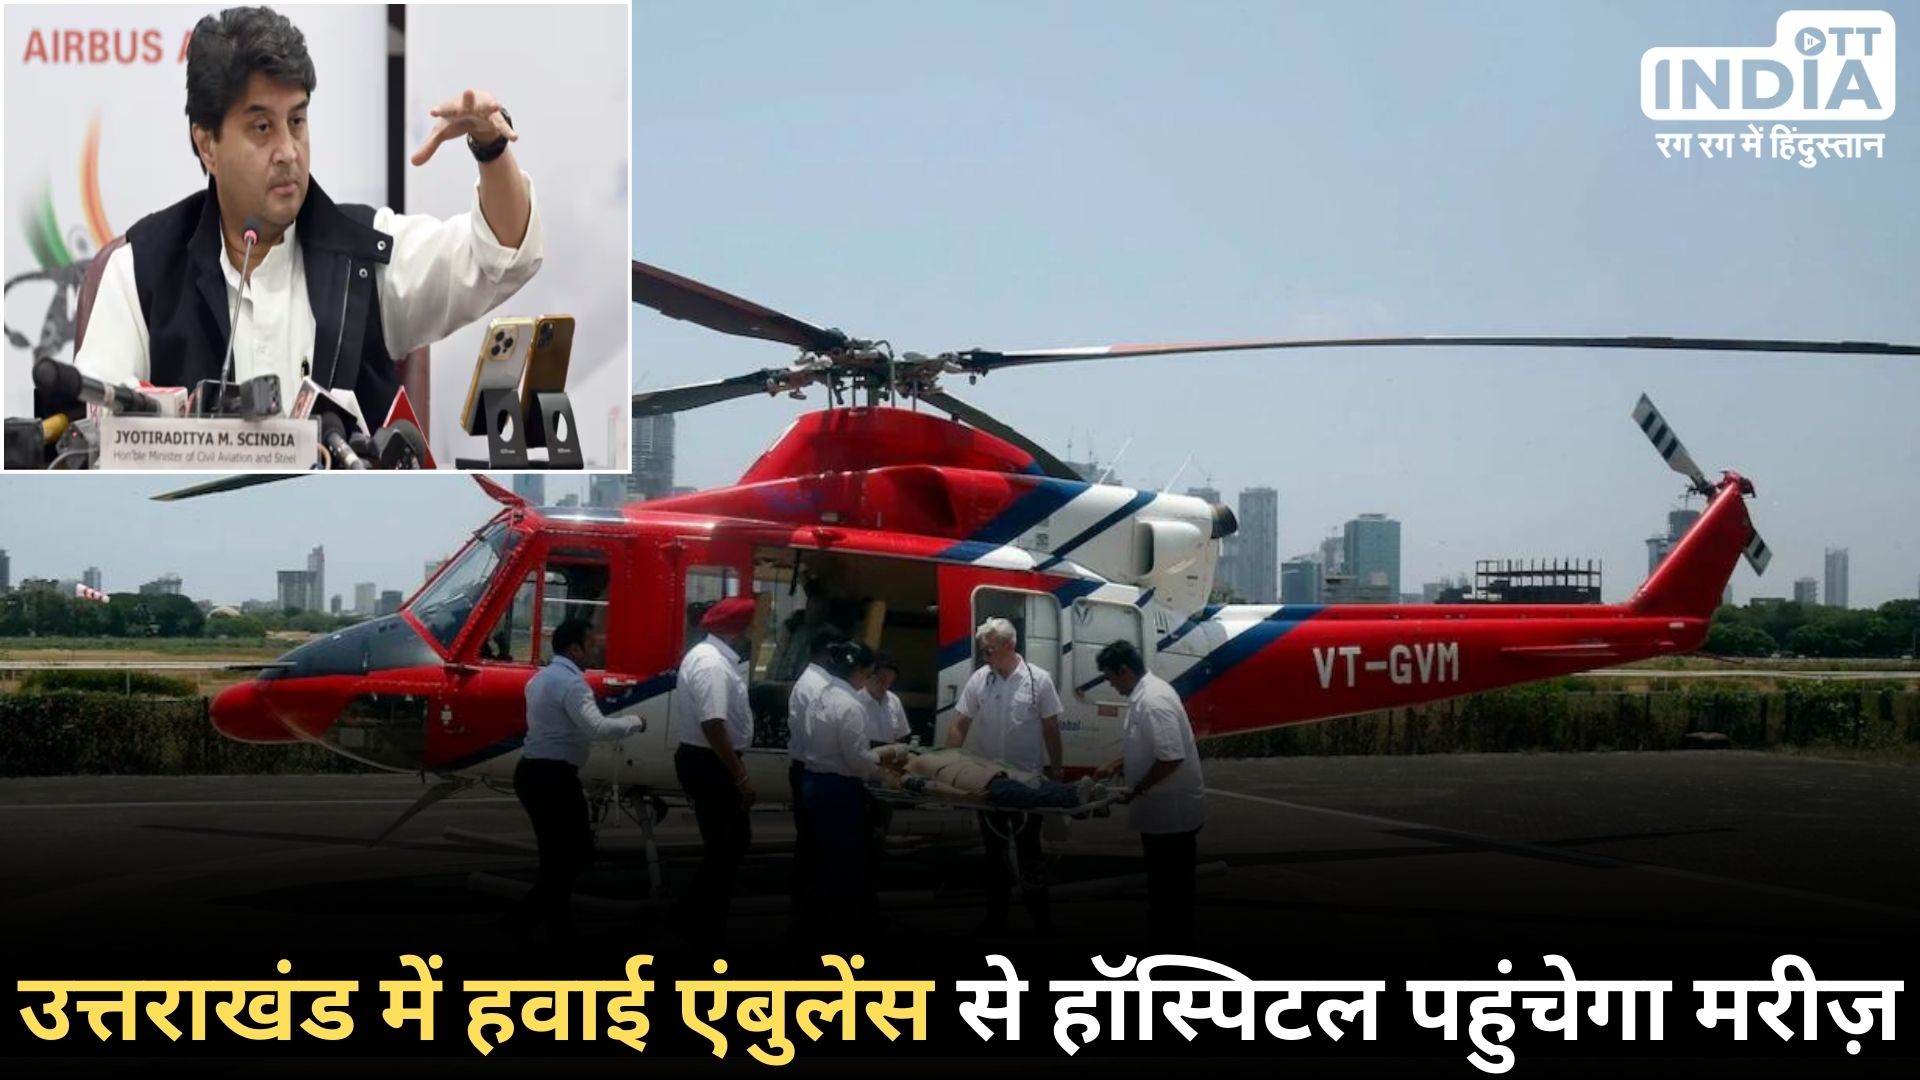 HEMS: भारत की पहली हेलीकॉप्टर आपातकालीन चिकित्सा सेवा शुरू करने वाला राज्य उत्तराखंड…